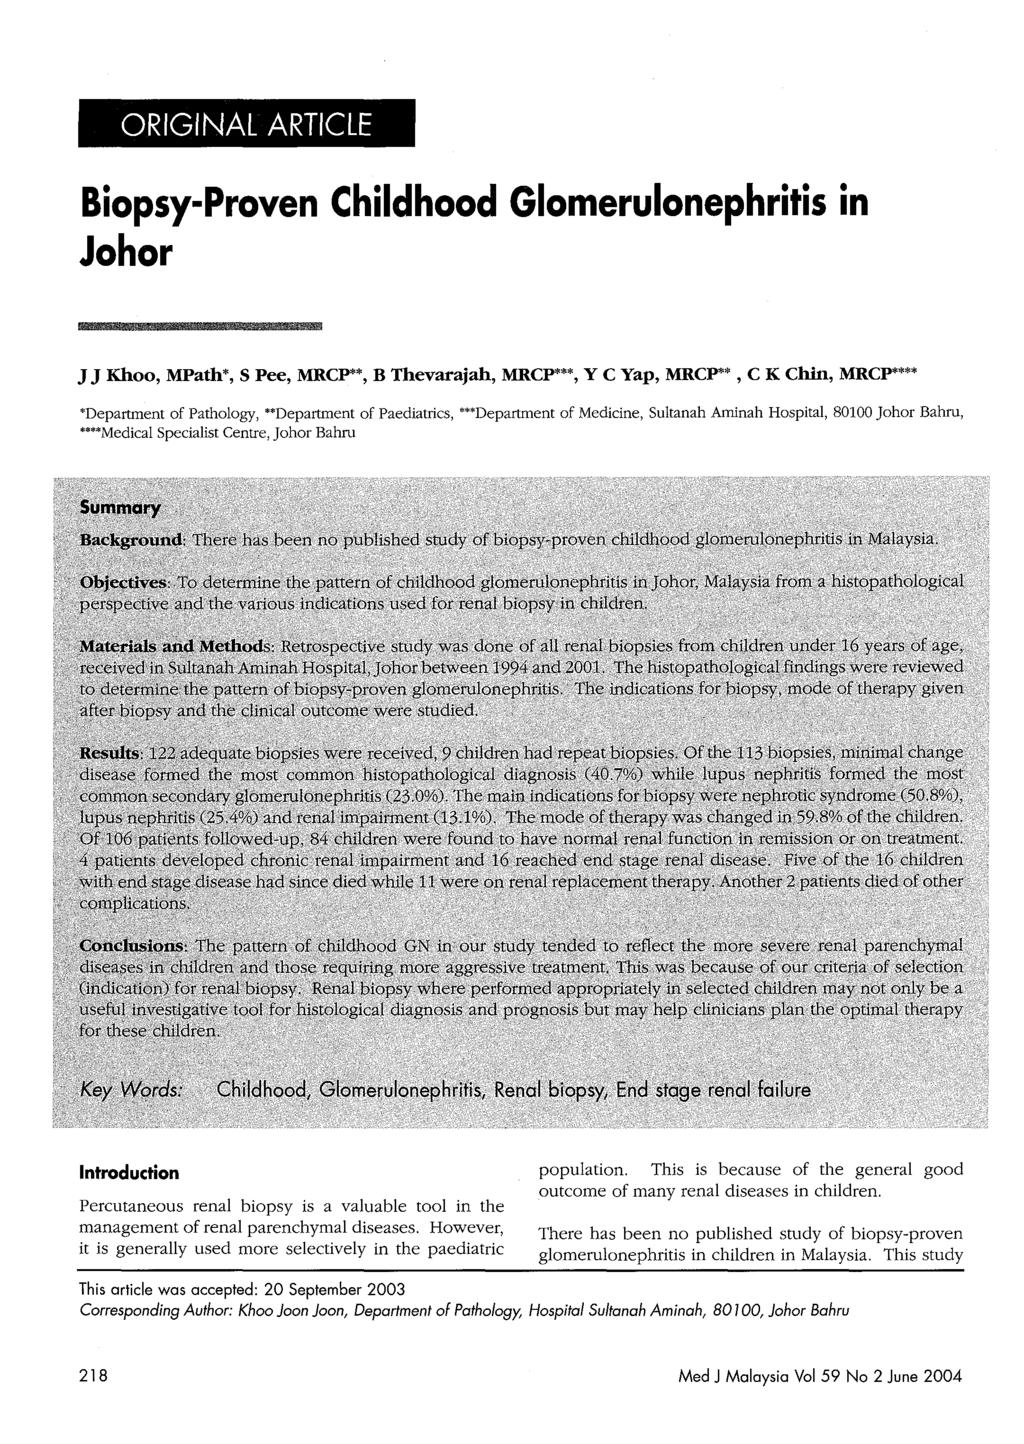 ORIGINAL ARTICLE Biopsy-Proven Childhood Glomerulonephritis in Johor J J Khoo, MPath*, S Pee, MRCP**, B Thevarajah, MRCP***, Y C Yap, MRCP**, C K Chin, MRCP**** 'Department of Pathology, "Department